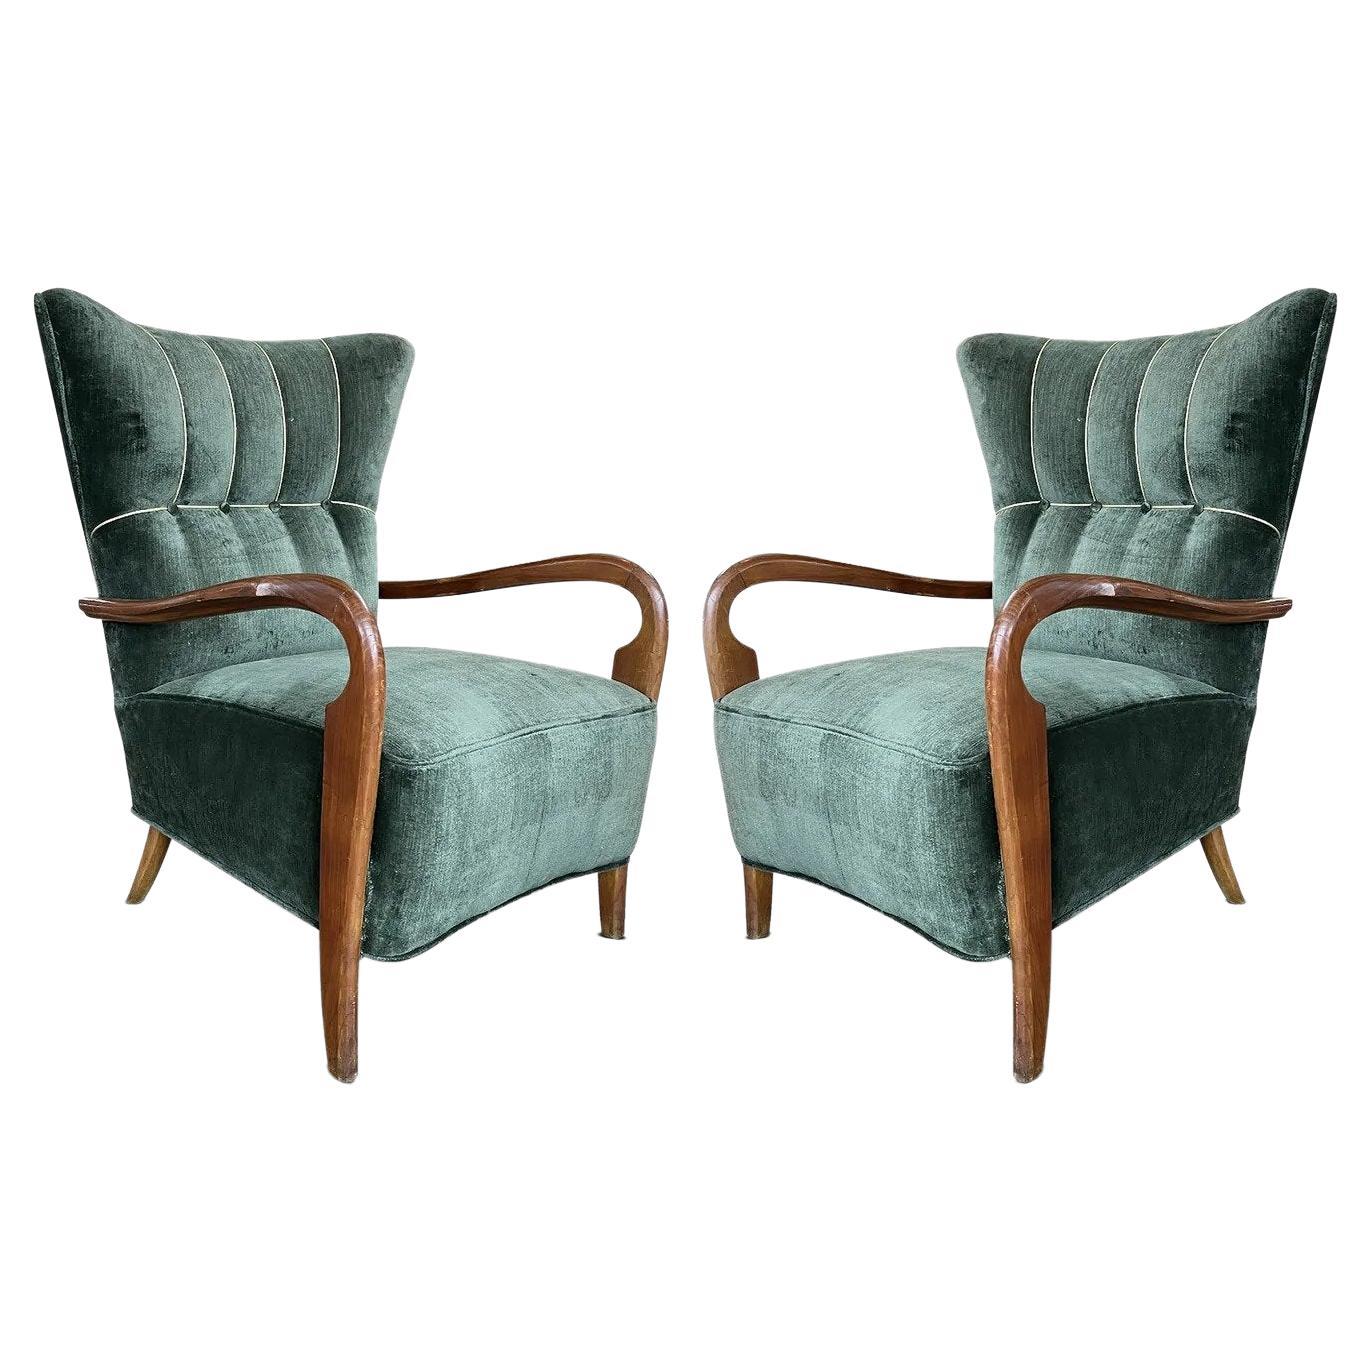 Pair of Italian 1950s Chairs Made of Walnut